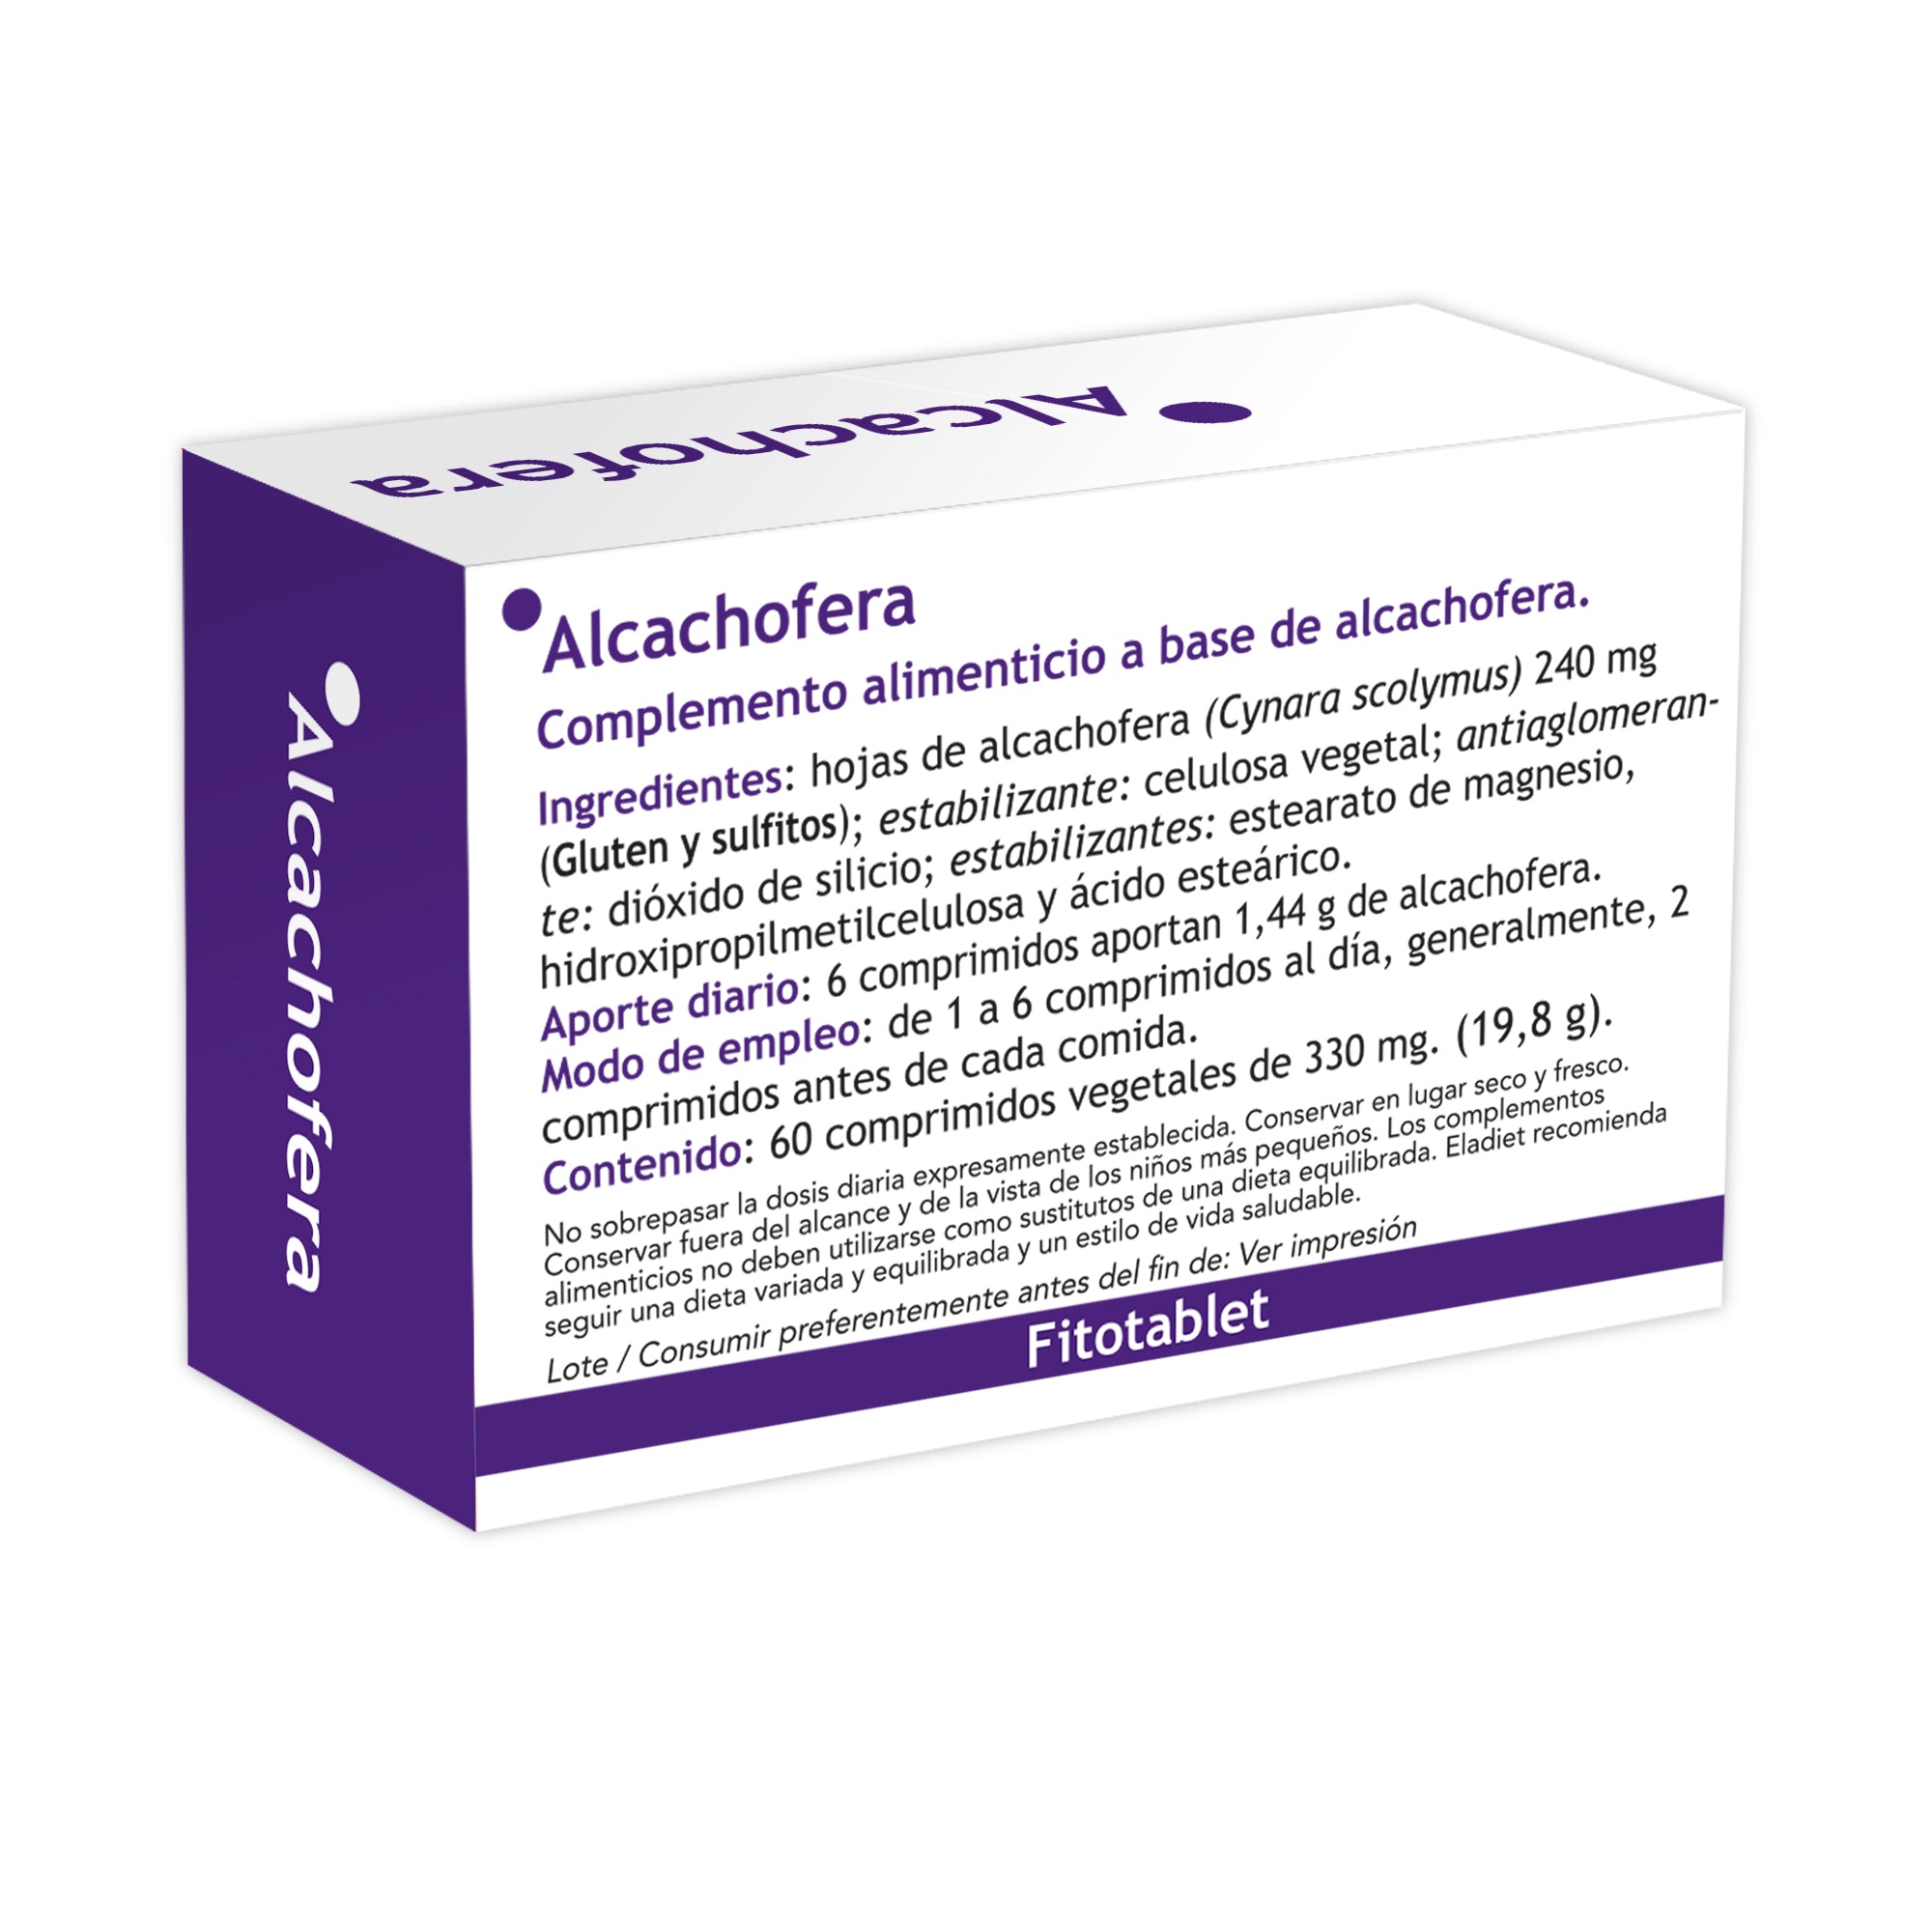 Eladiet - Fitotablet Alcachofera 330Mg 60 Comprimidos - Biopharmacia, Parafarmacia online